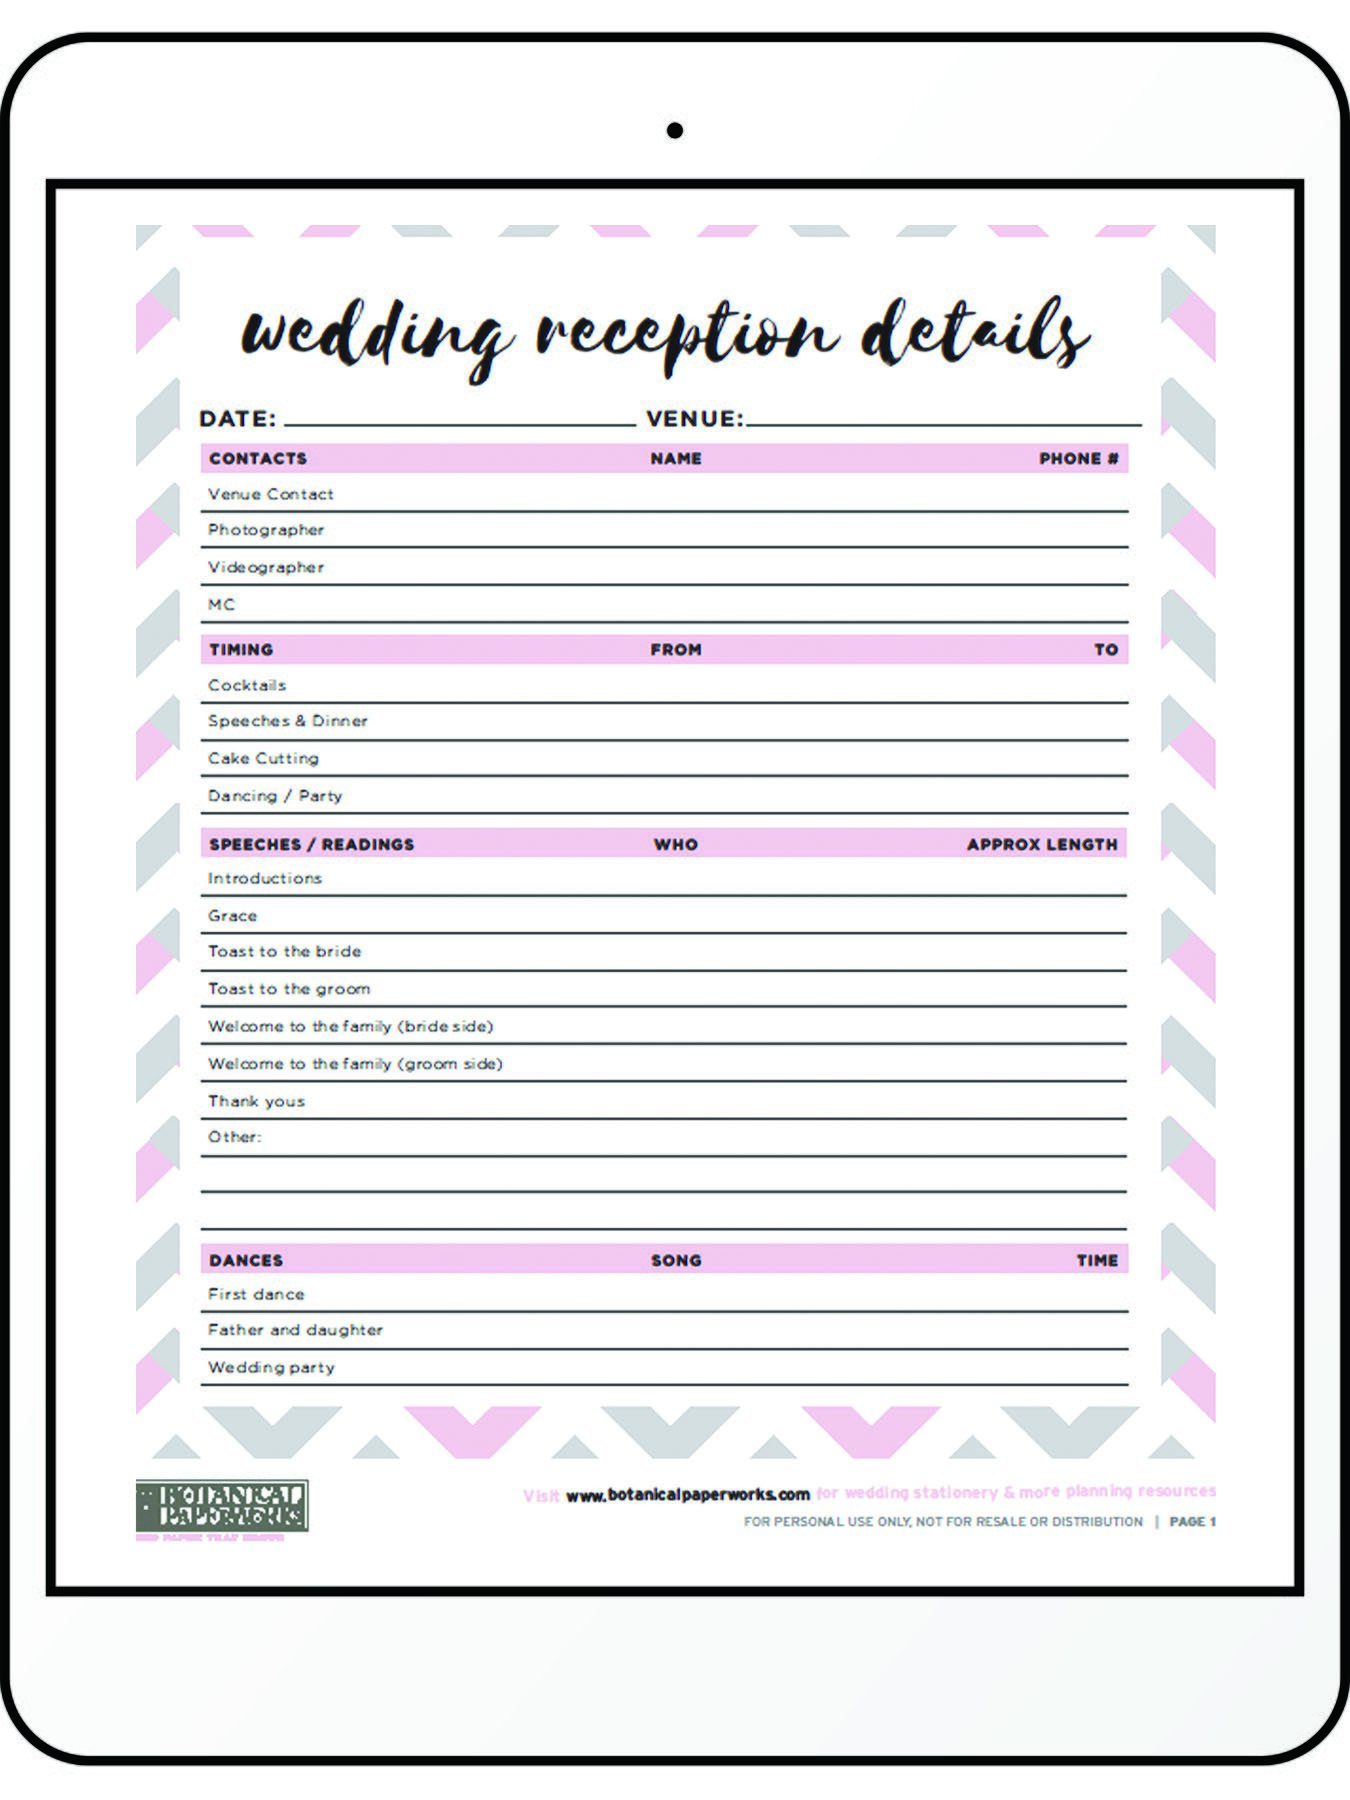 printable-wedding-reception-timeline-printable-blank-world